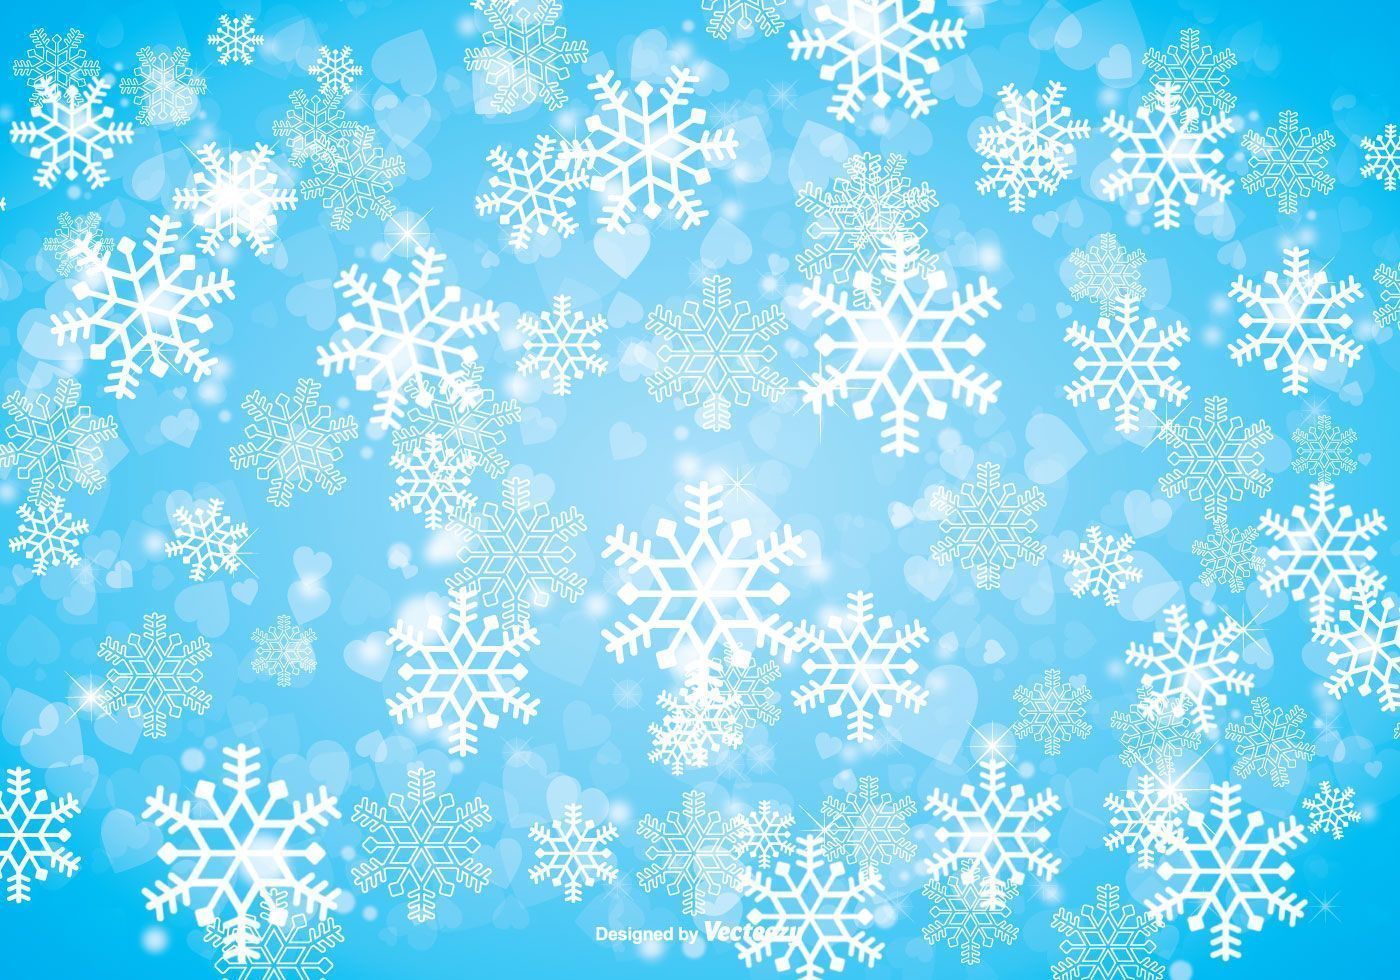 Winter Background Free Vector Art - (11252 Free Downloads)